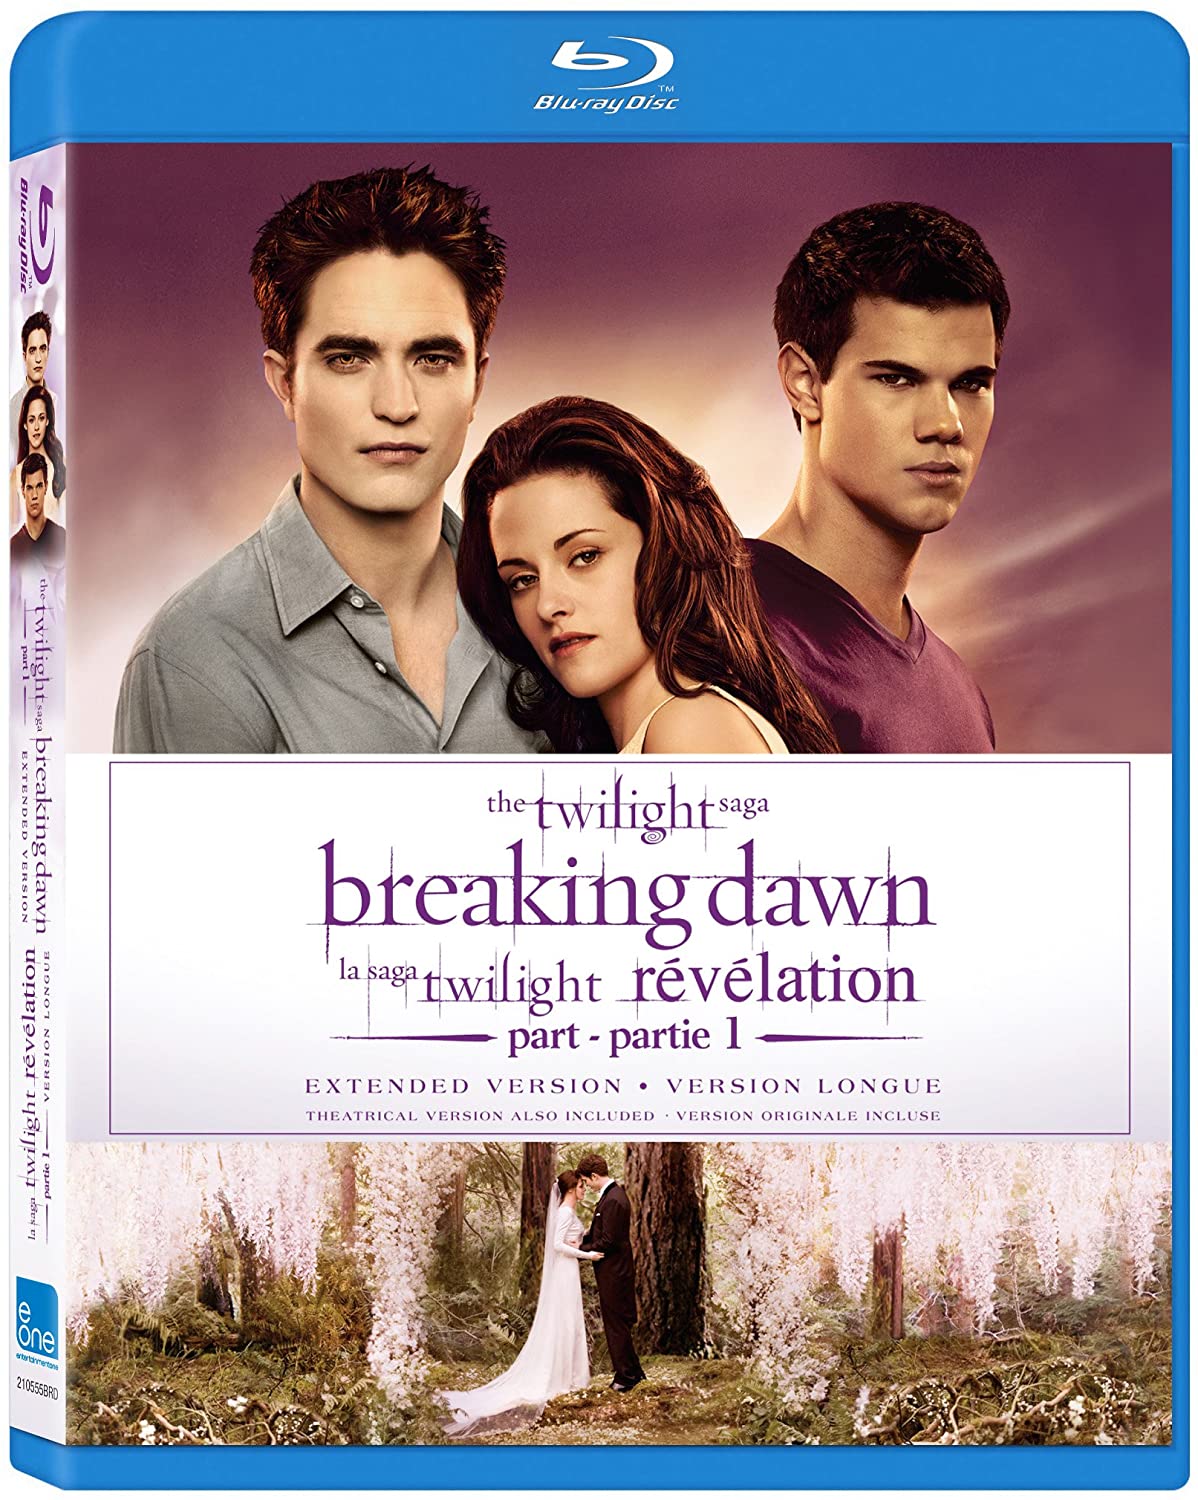 The Twilight Saga: Breaking Dawn - Part 1 (Extended Edition) / La saga Twilight : Révélation - Partie 1 (version longue) [Blu-ray] (Bilingual) [Blu-ray]